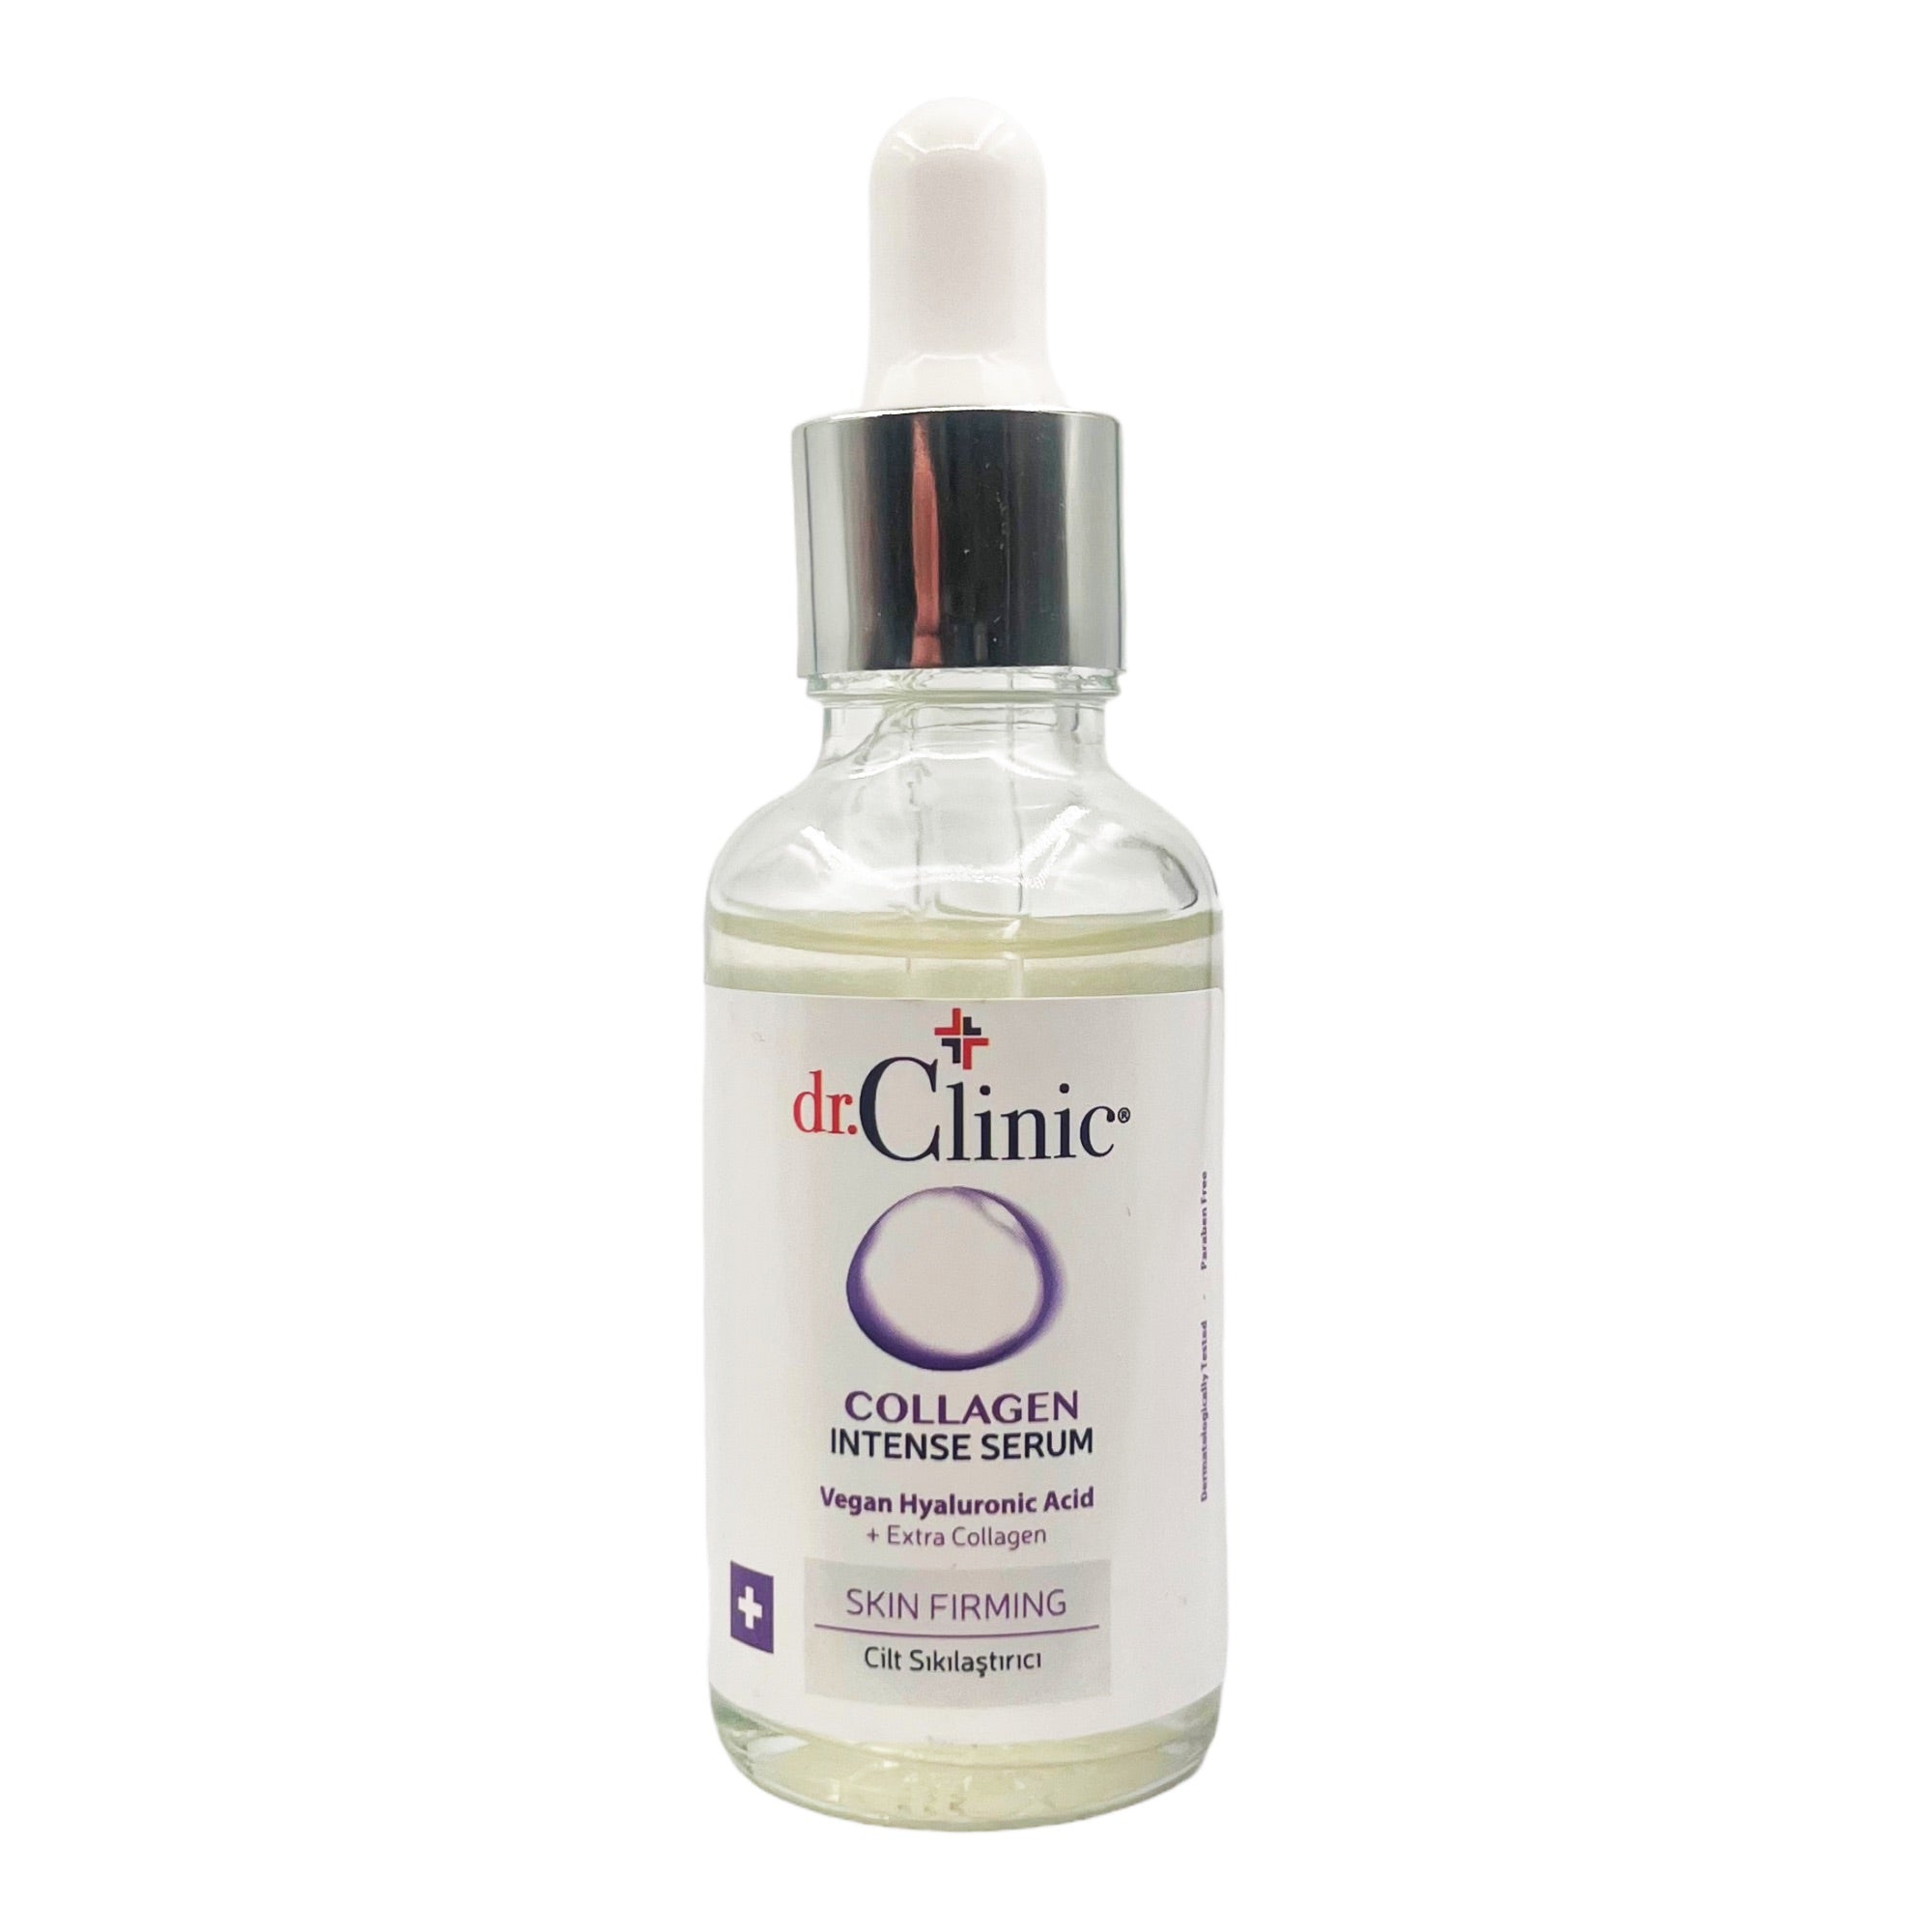 Dr.Clinic - Collagen Intense Serum 30ml